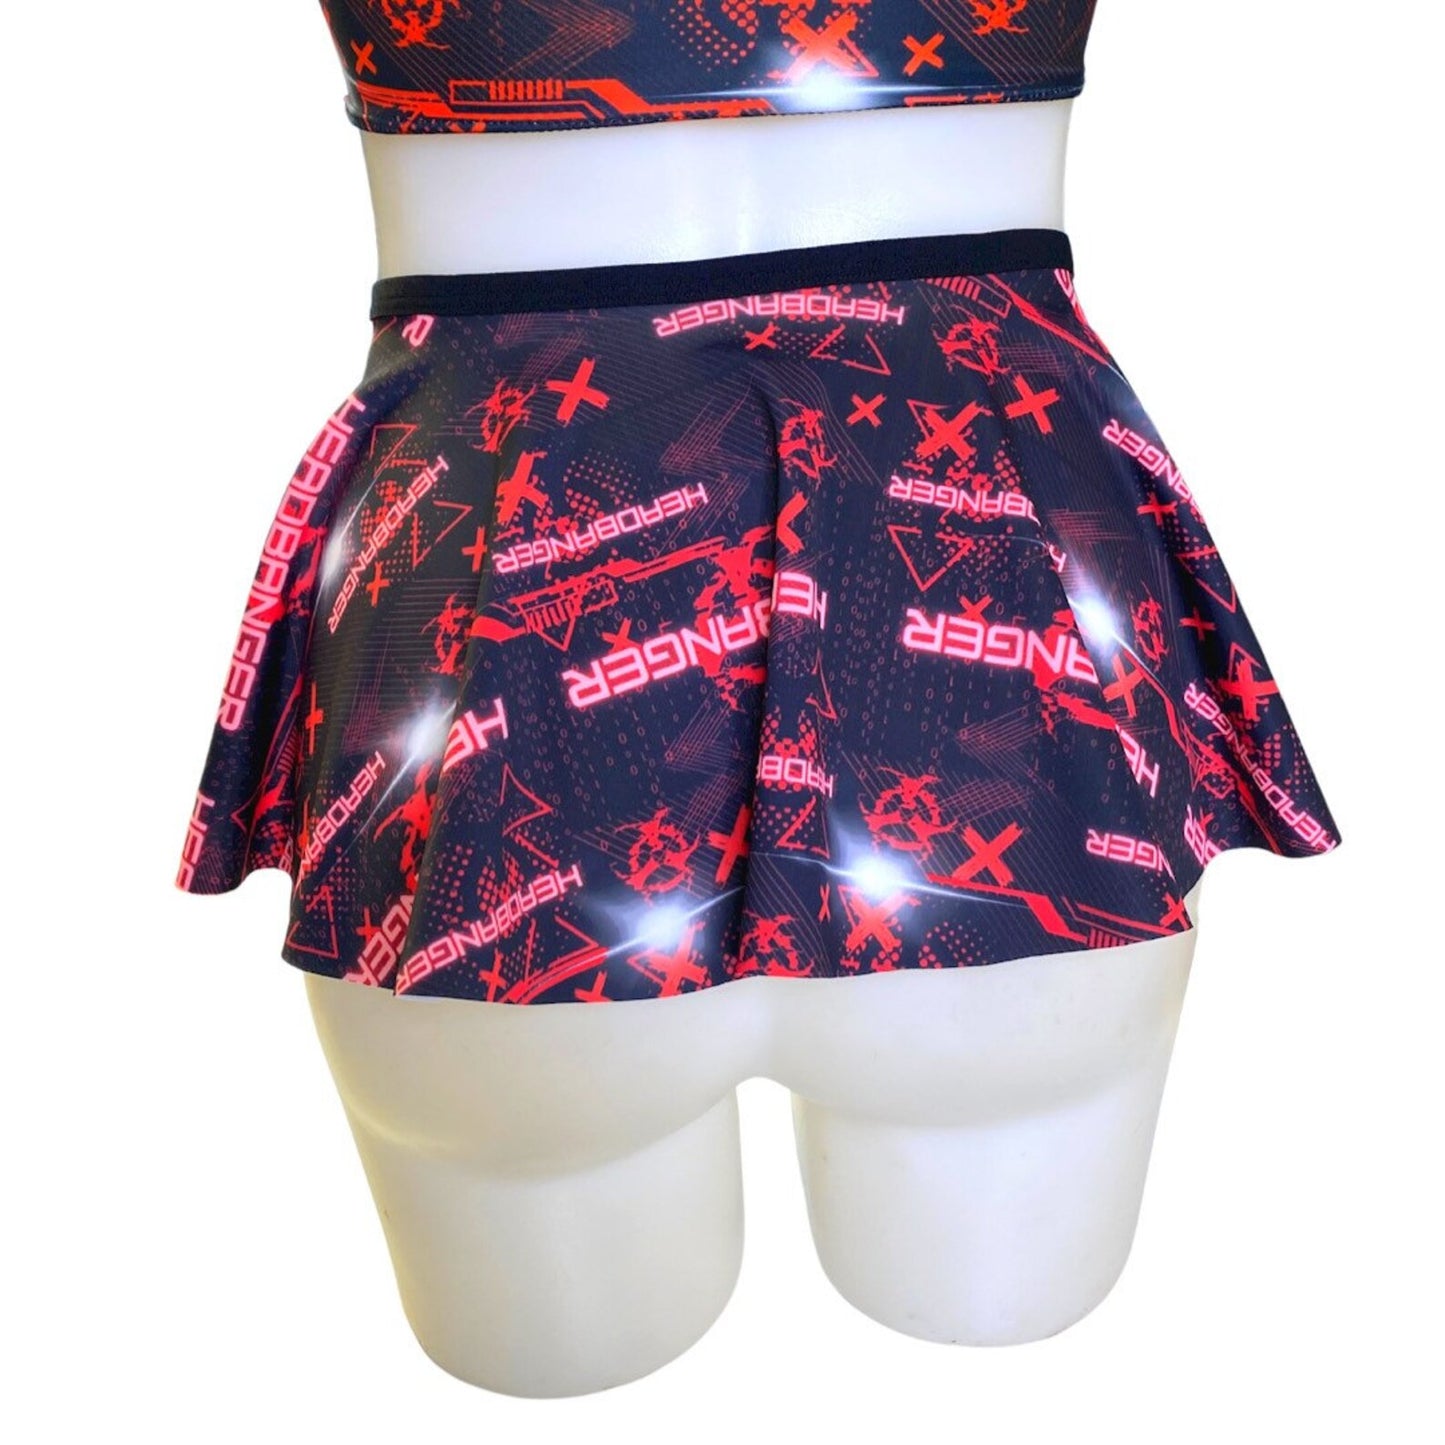 Headbanger Ultra Mini Buckle Skirt - 60% OFF